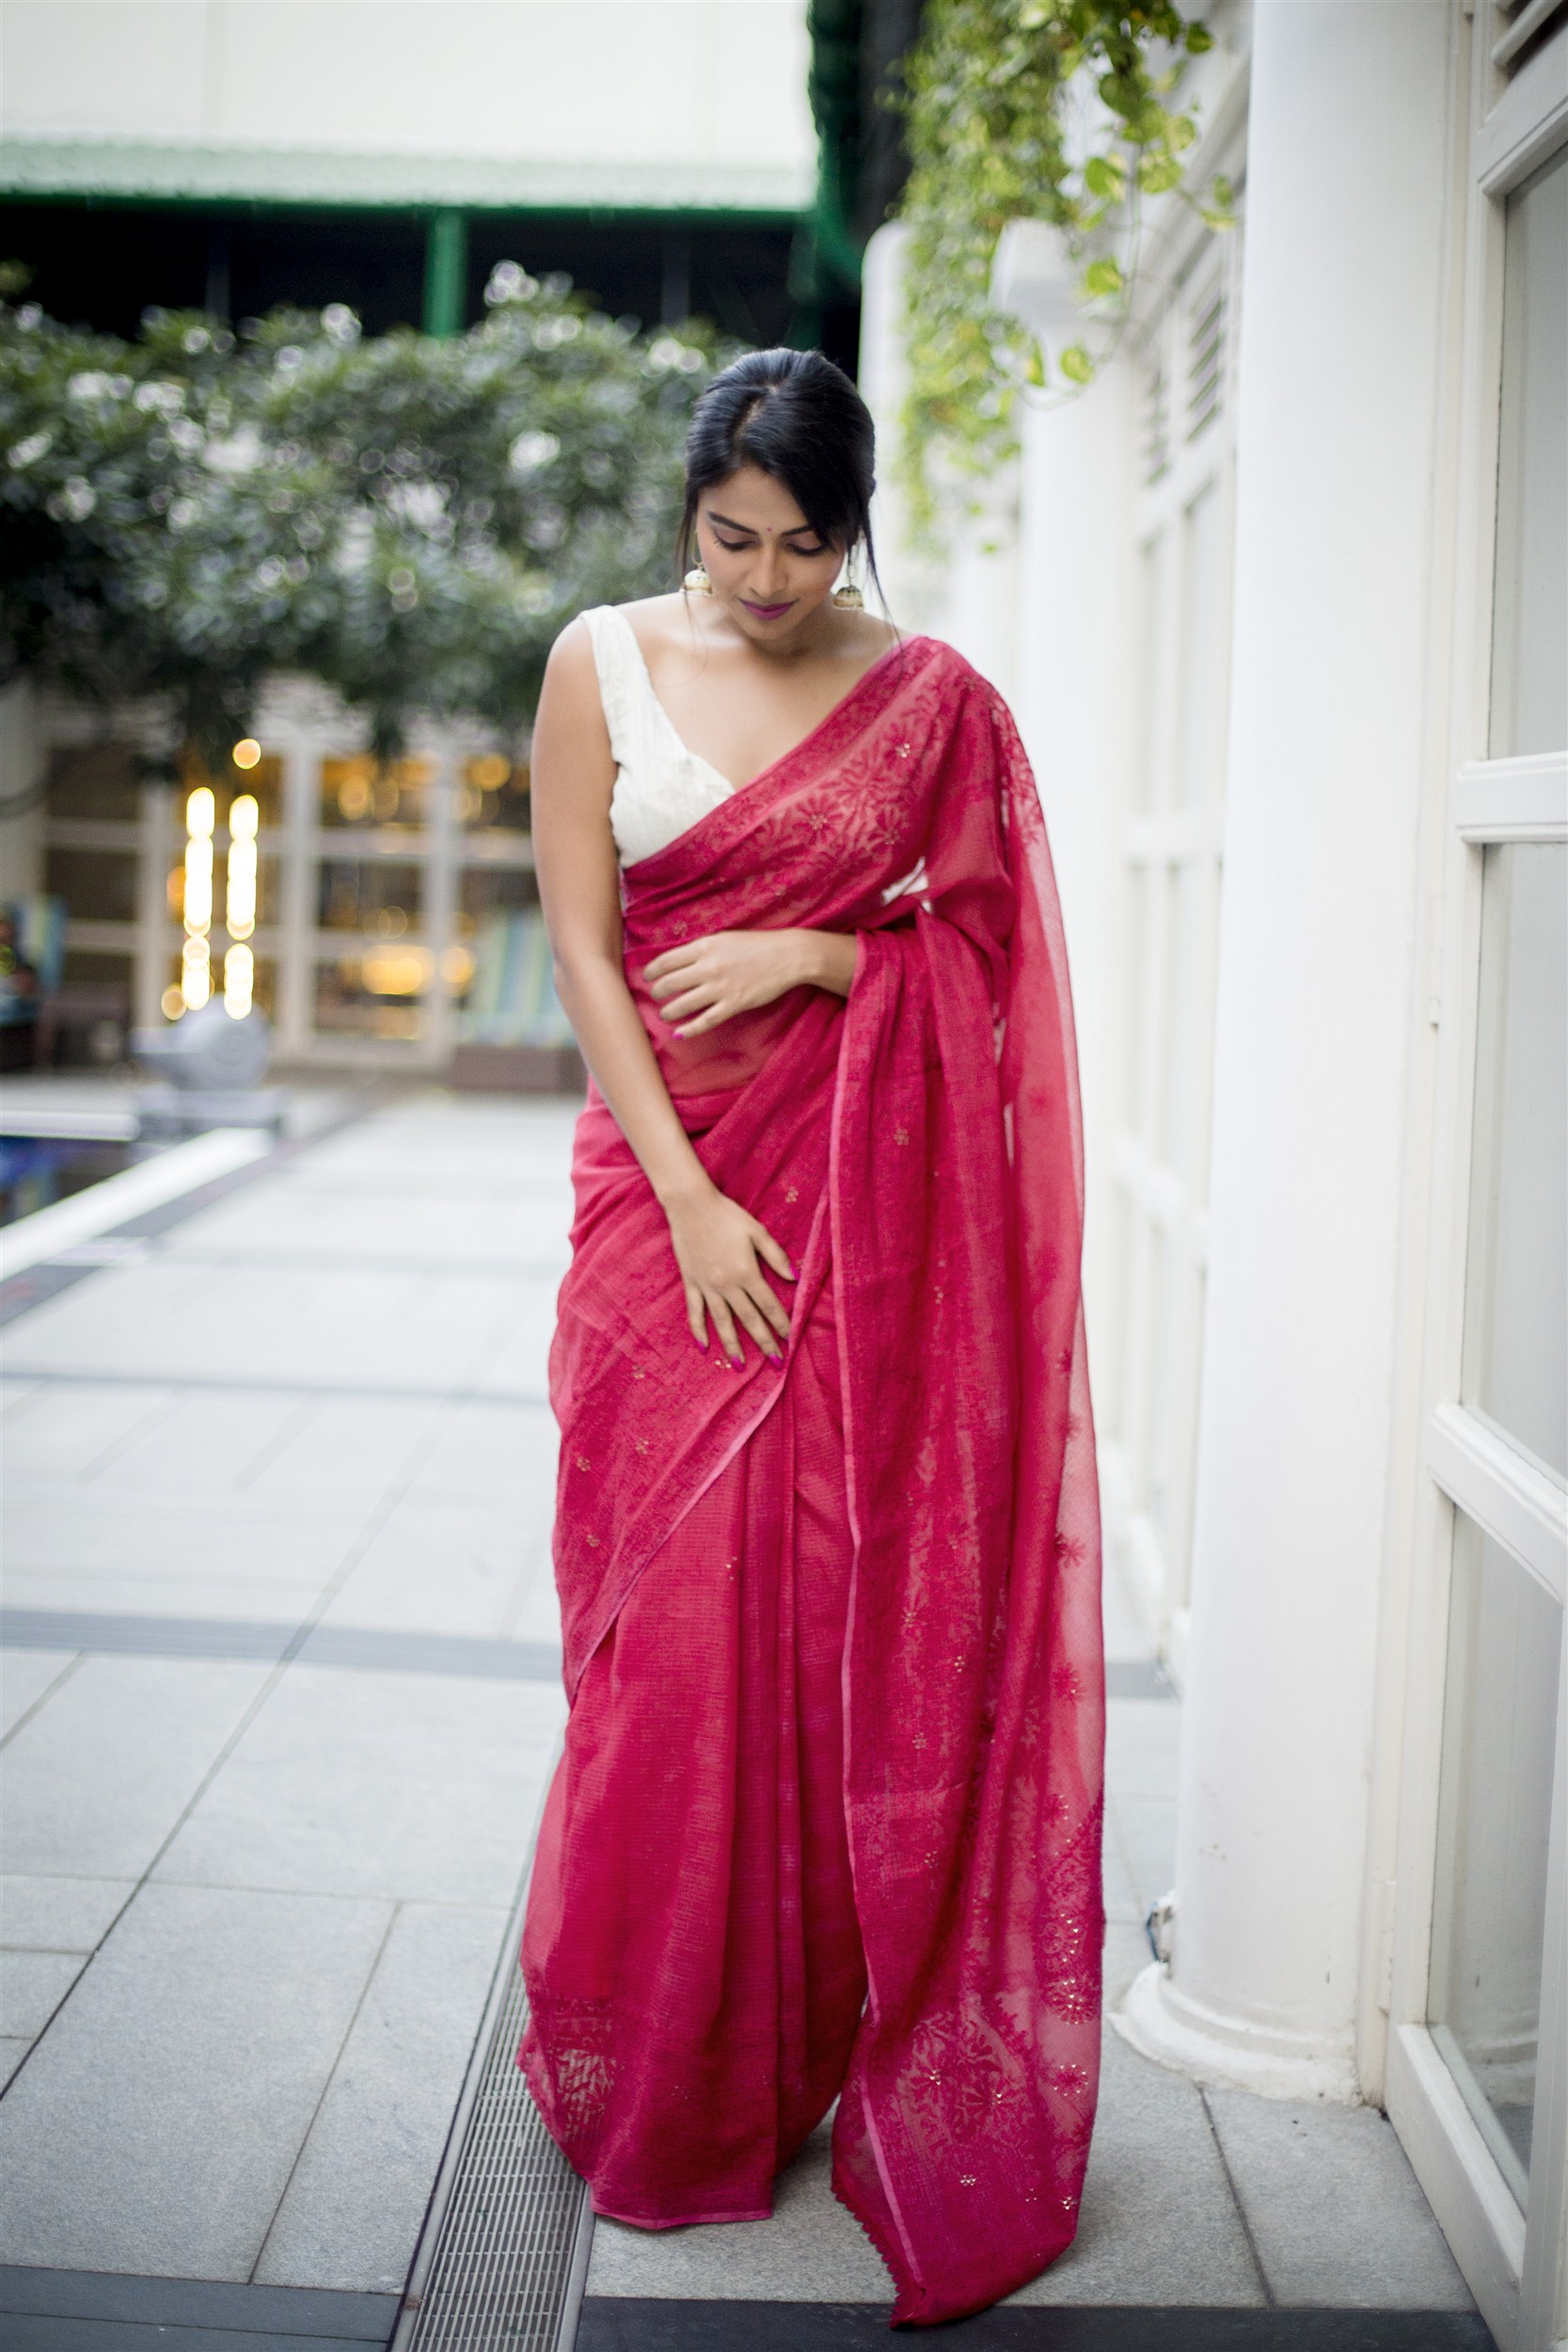 Amala Paul's Diwali look in pink saree